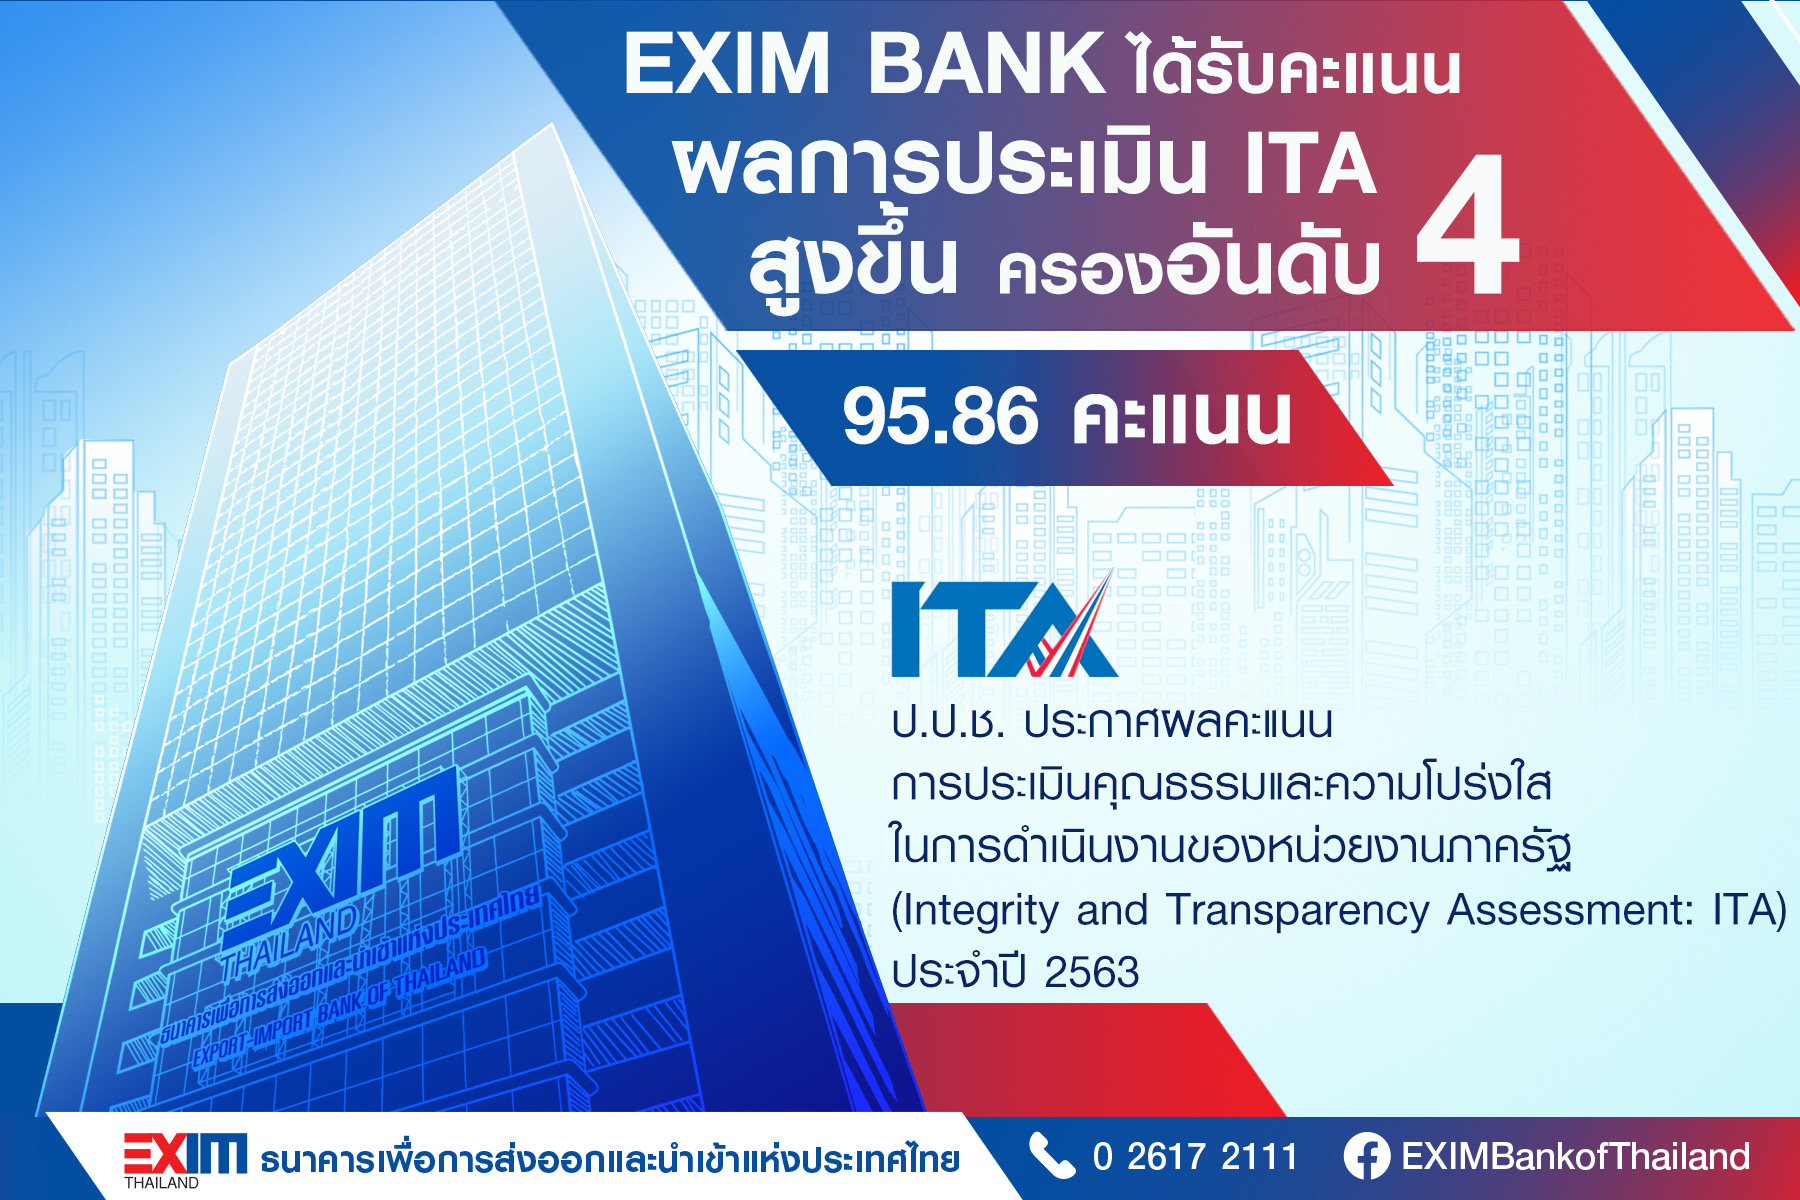 EXIM BANK ได้คะแนนประเมินคุณธรรมและความโปร่งใสในการดำเนินงานของหน่วยงานภาครัฐ (ITA) สูงขึ้นถึงระดับสูงสุด (AA) ครอง “อันดับ 4” ของหน่วยงานรัฐวิสาหกิจ